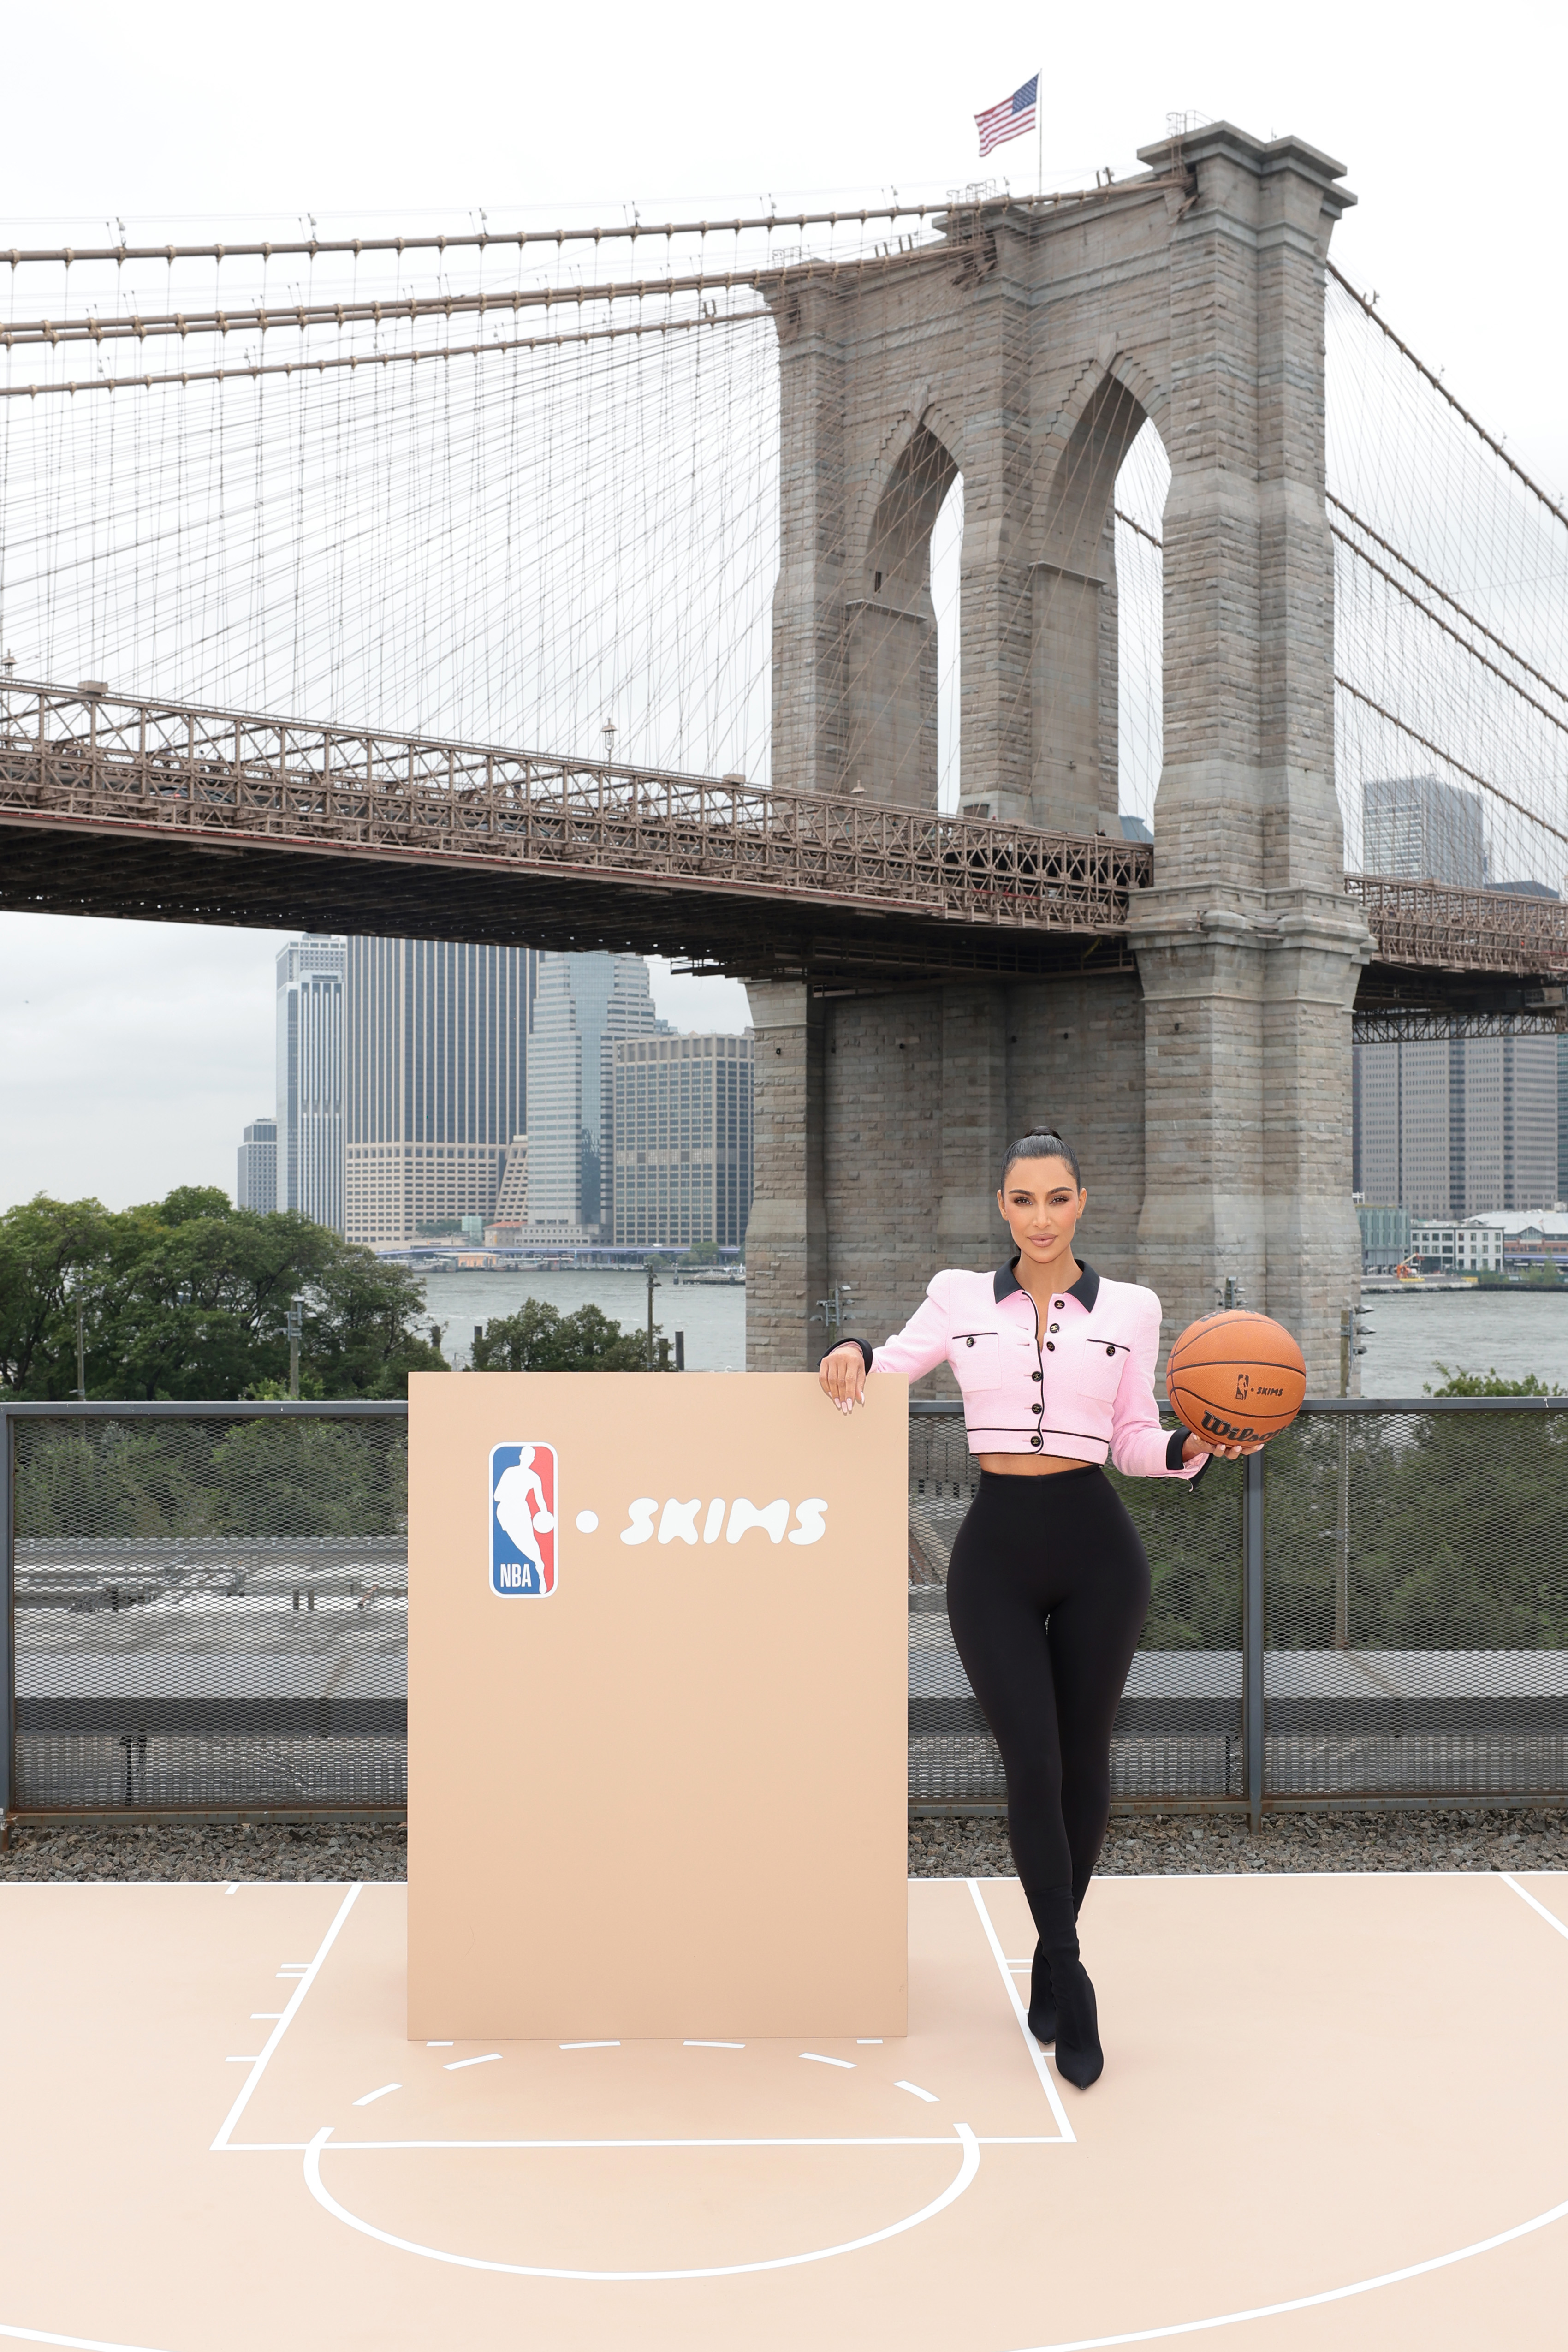 NBA and Louis Vuitton Announce a Multiyear Partnership, Collection